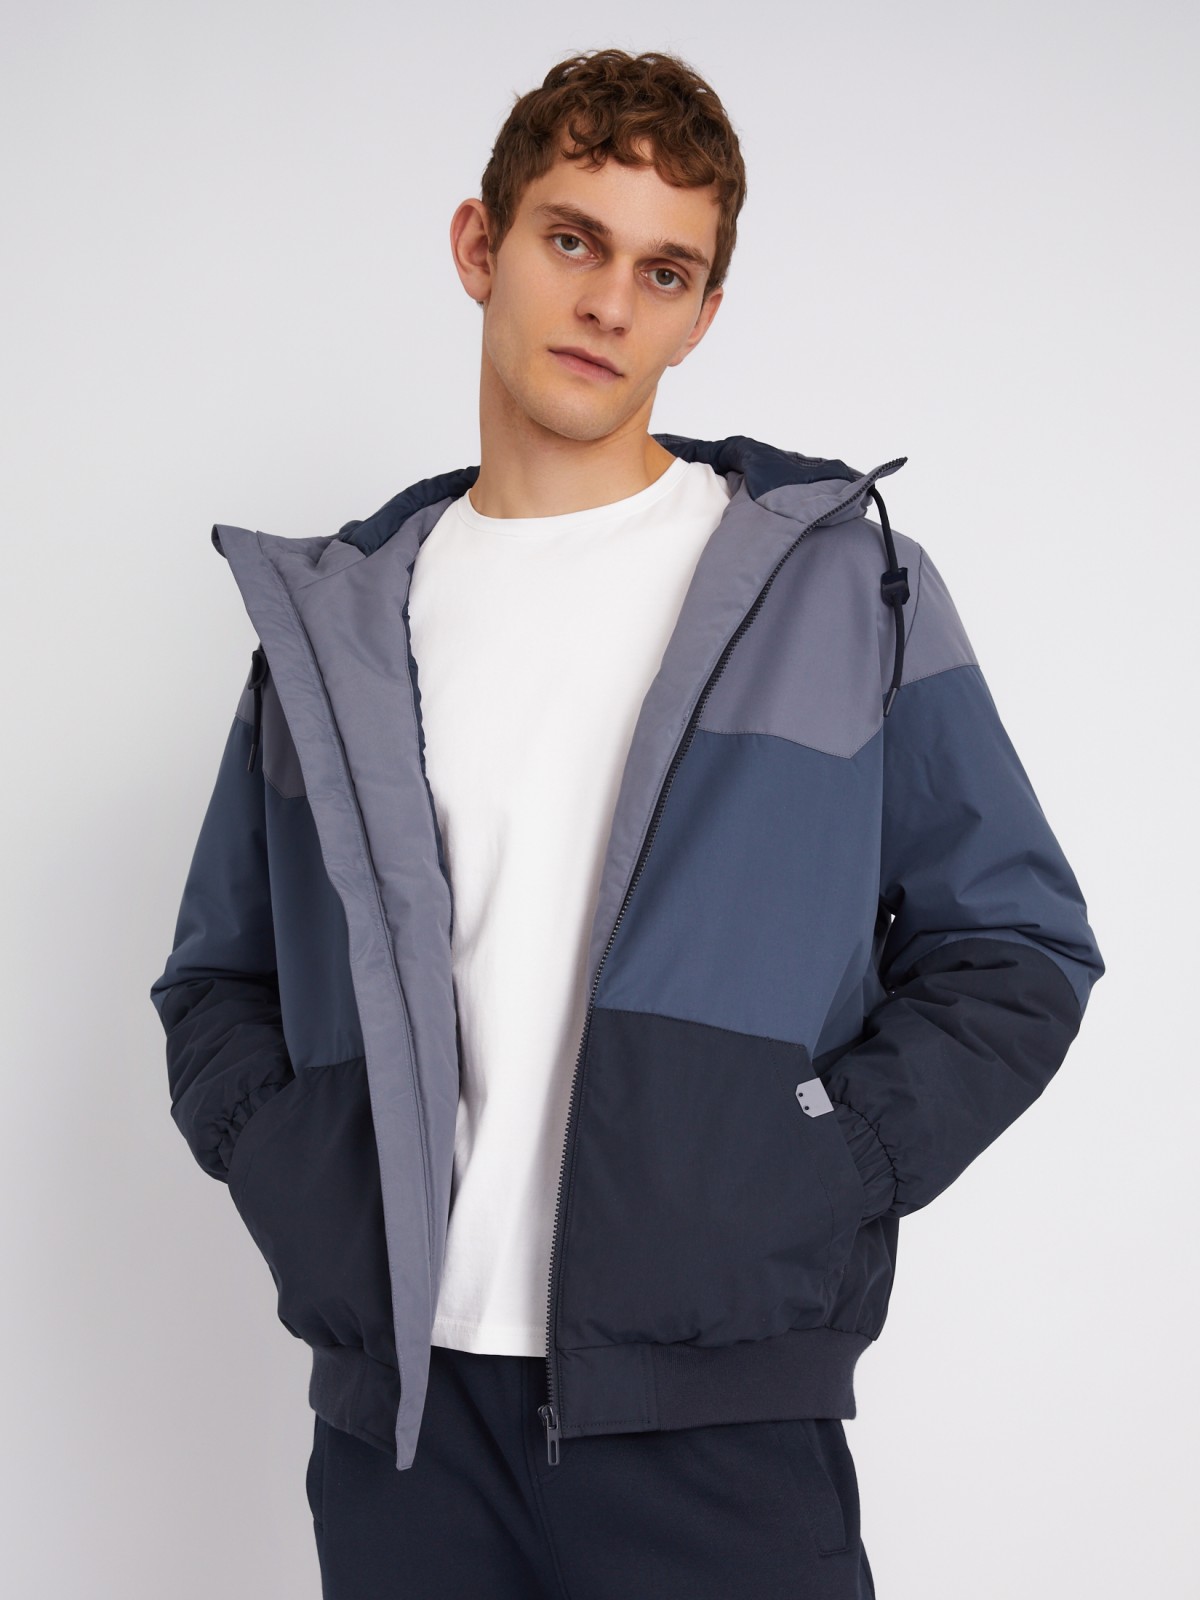 Утеплённая куртка-бомбер на синтепоне с капюшоном zolla 013345102174, цвет синий, размер M